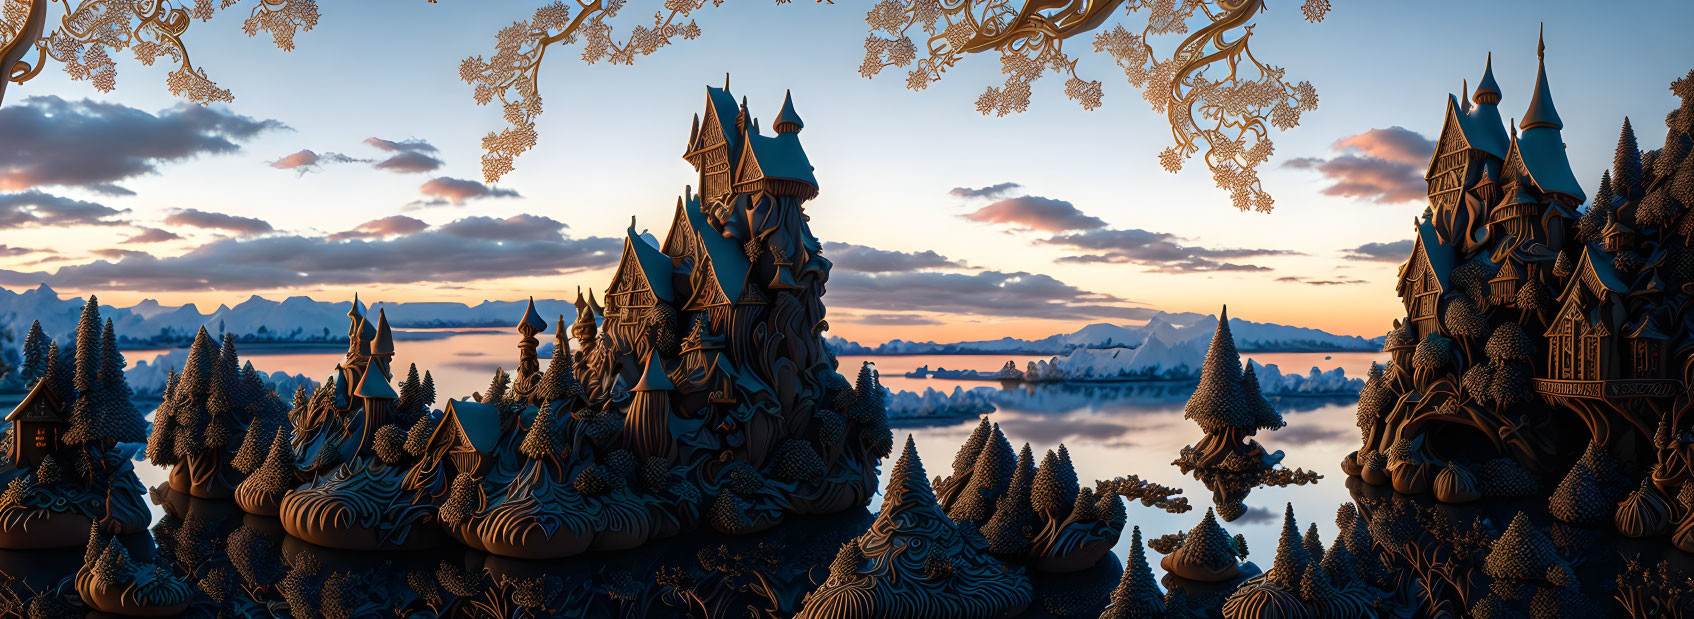 Fantastical snowy landscape with castle-like structures under sunset sky